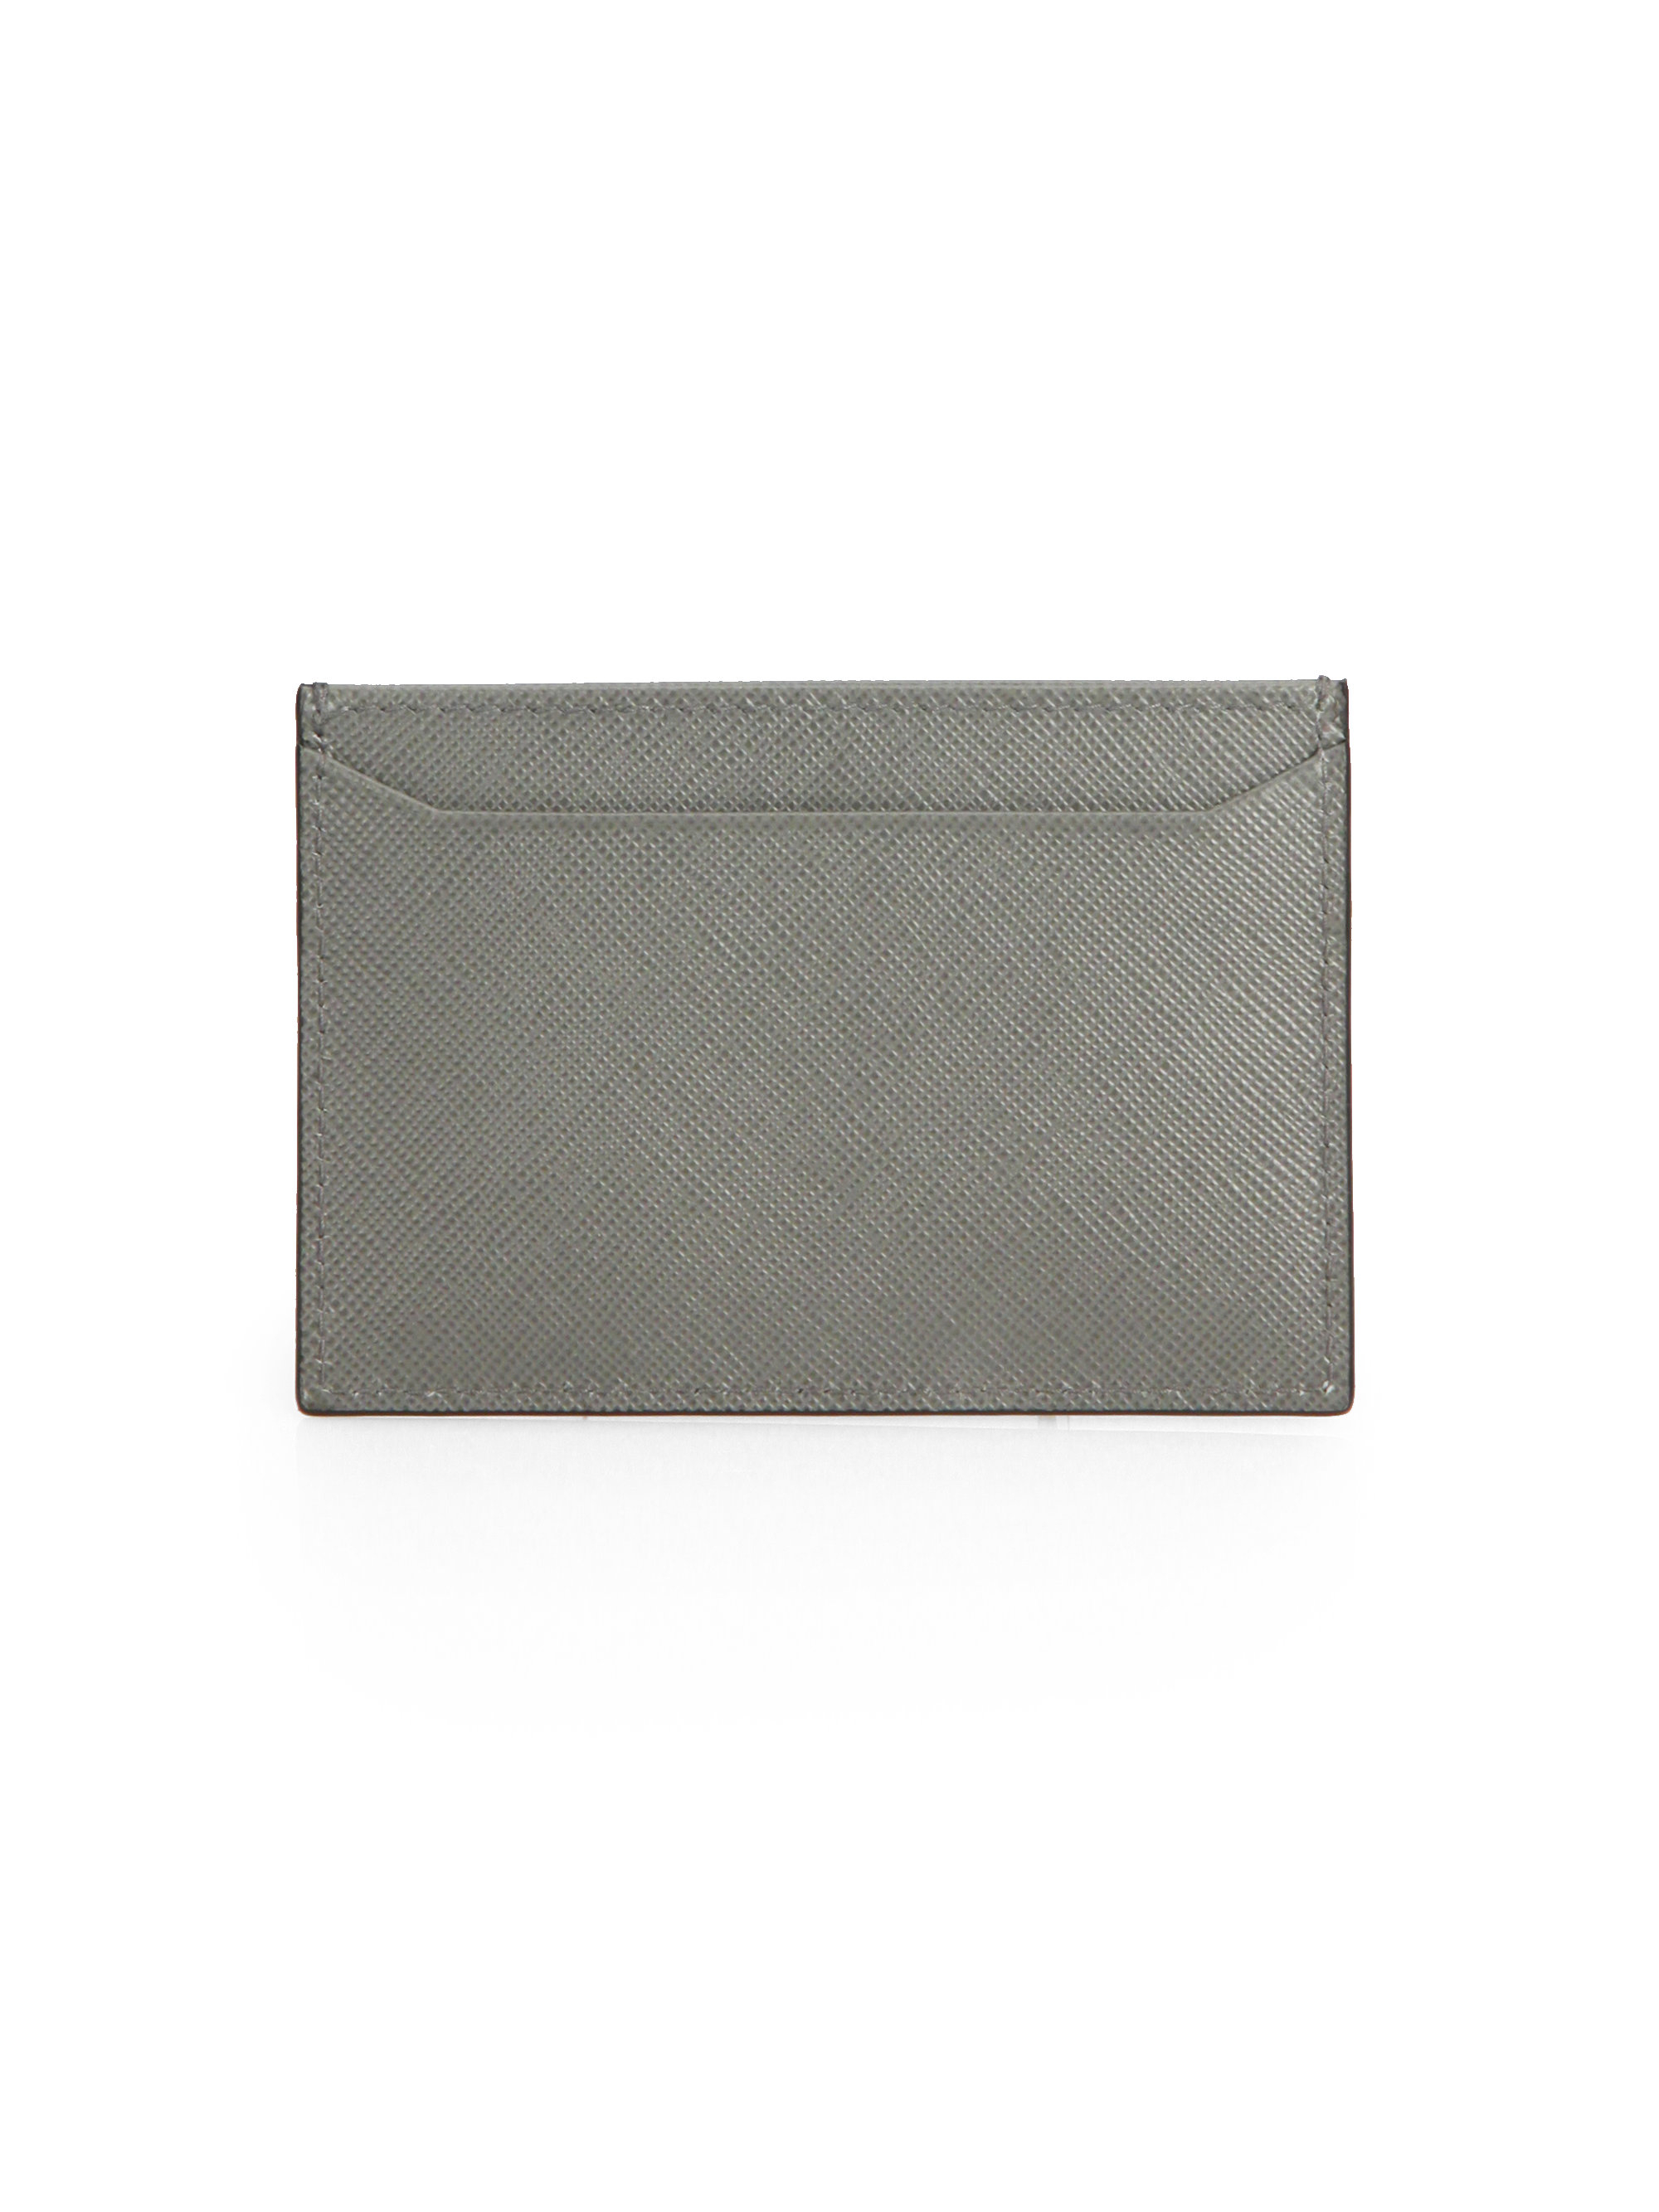 cheap fake prada handbags - Prada Saffiano Leather Credit Card Case in Gray for Men (No Color ...